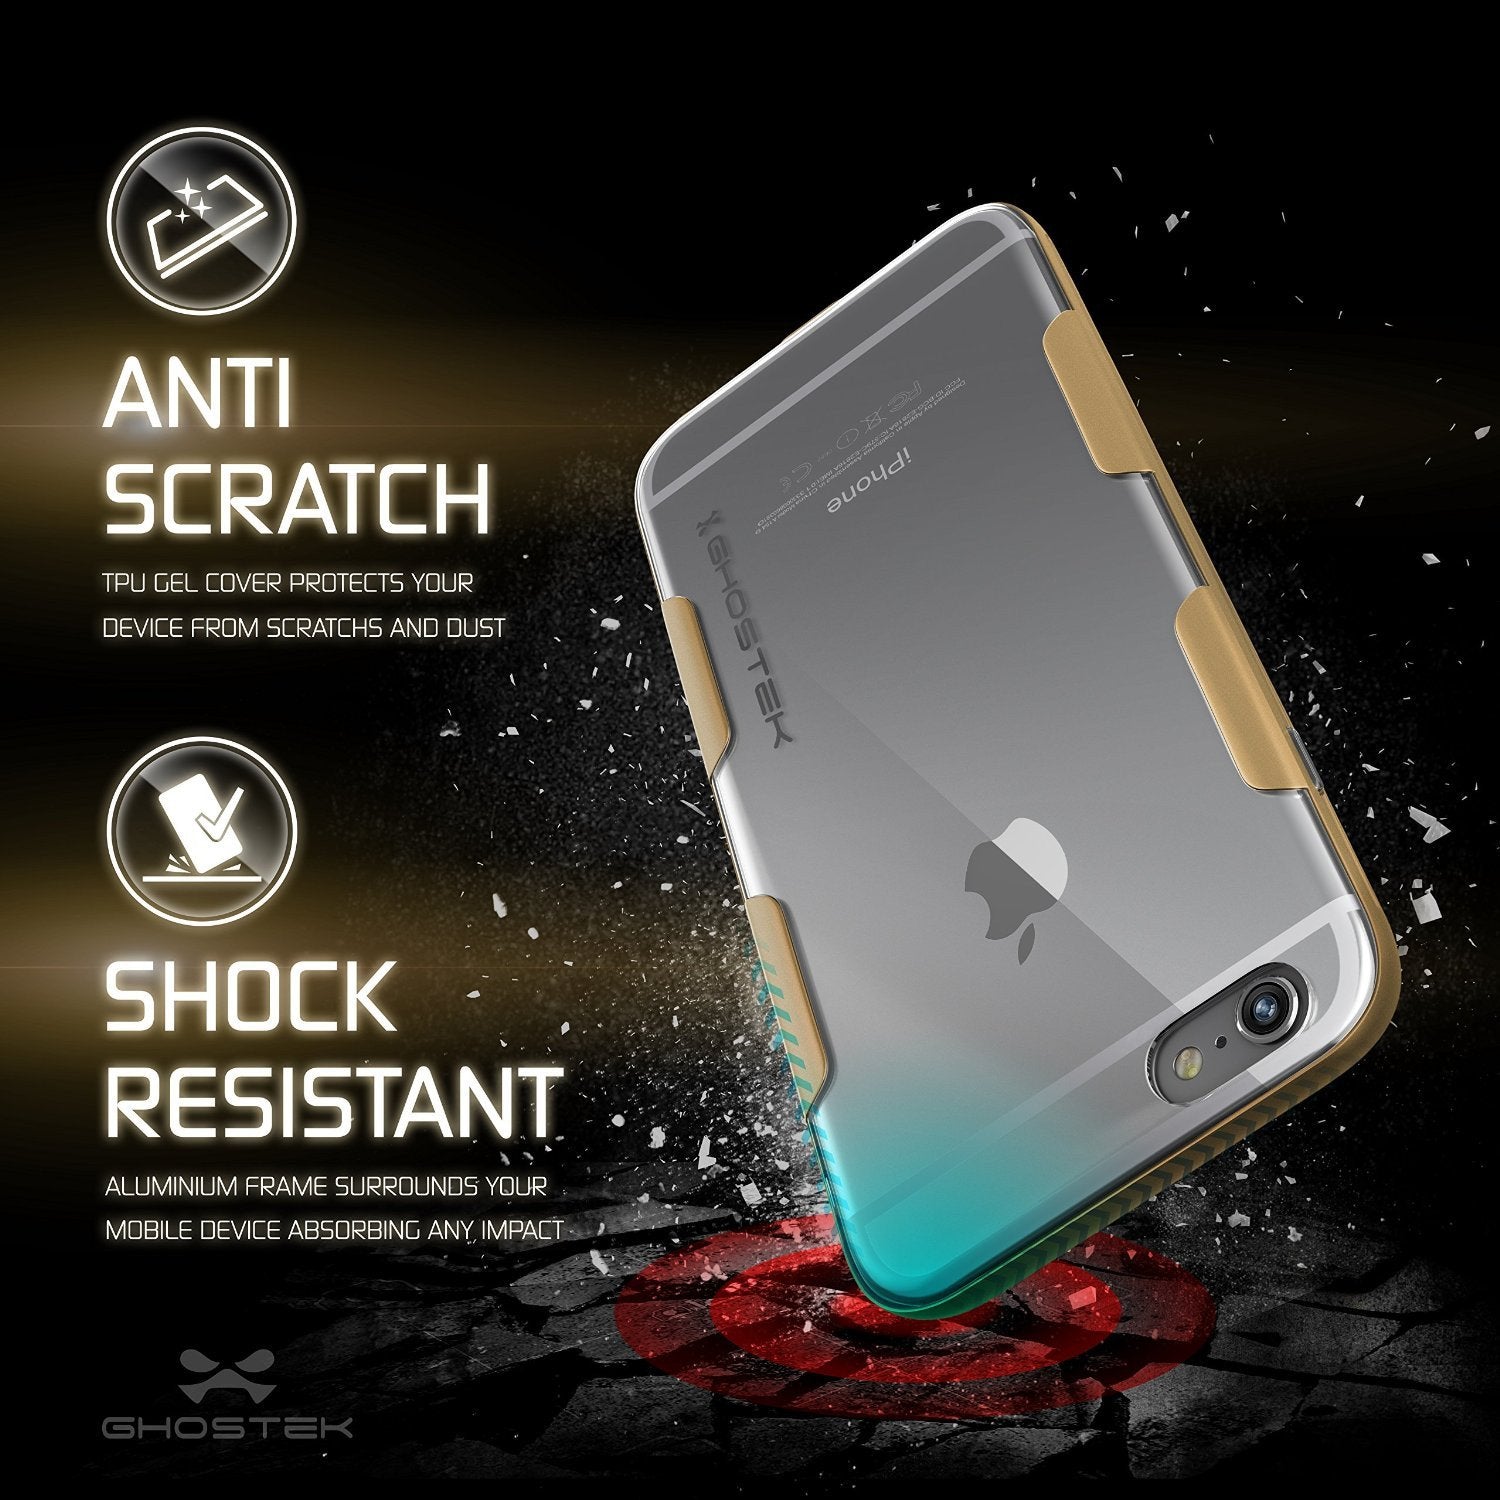 iPhone 6s Plus Case Gold Ghostek Cloak, Slim Protective Armor w/ Tempered Glass | Lifetime Warranty